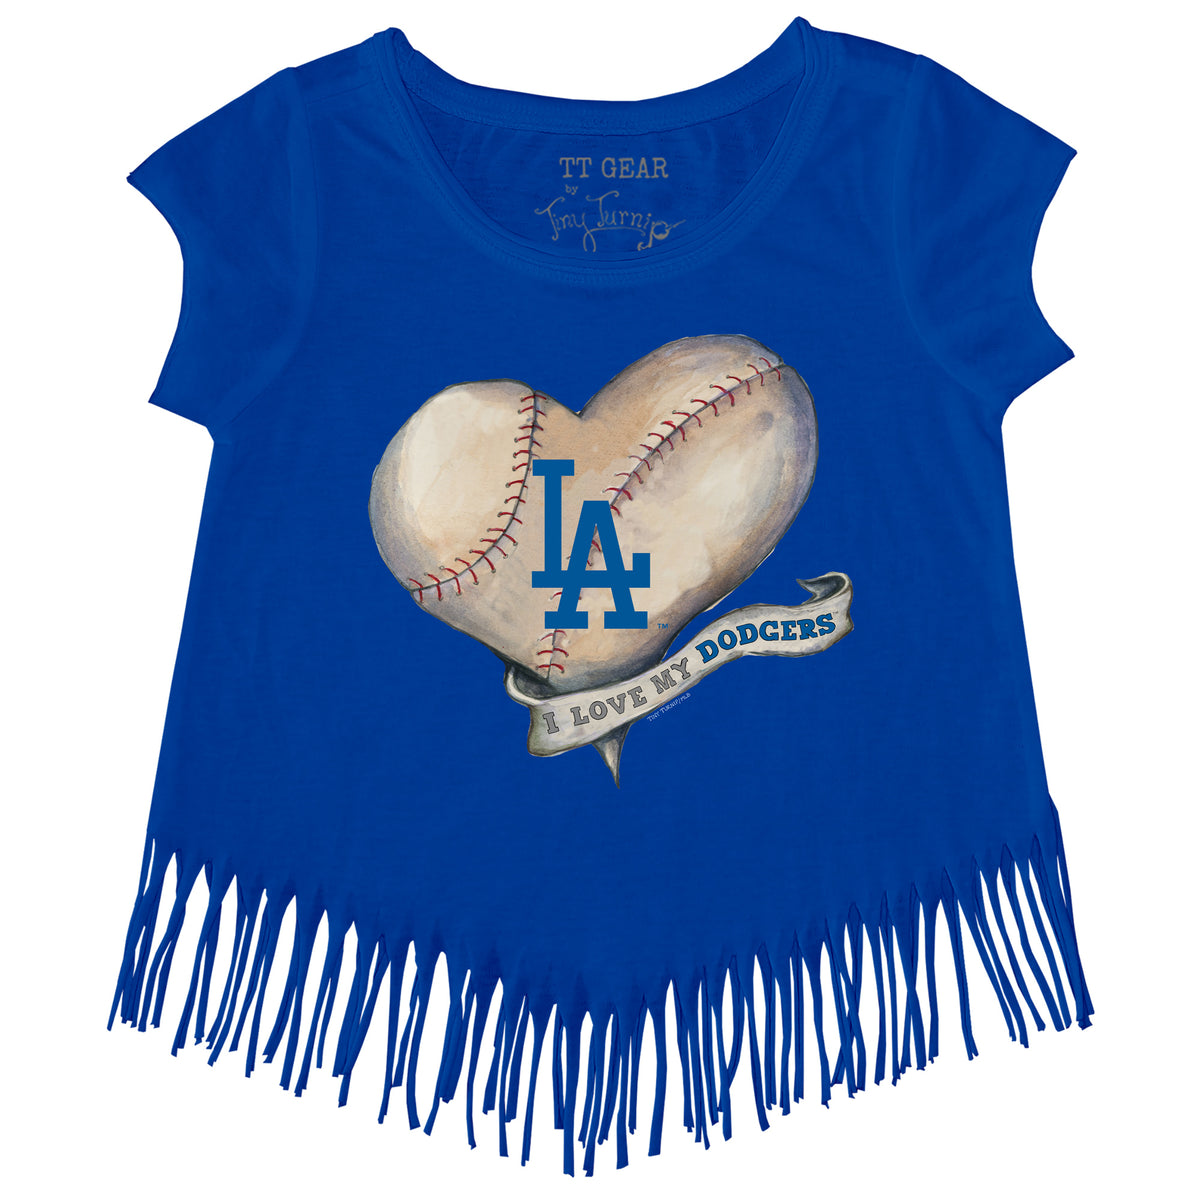 Lids Los Angeles Dodgers Tiny Turnip Women's Stega T-Shirt - White